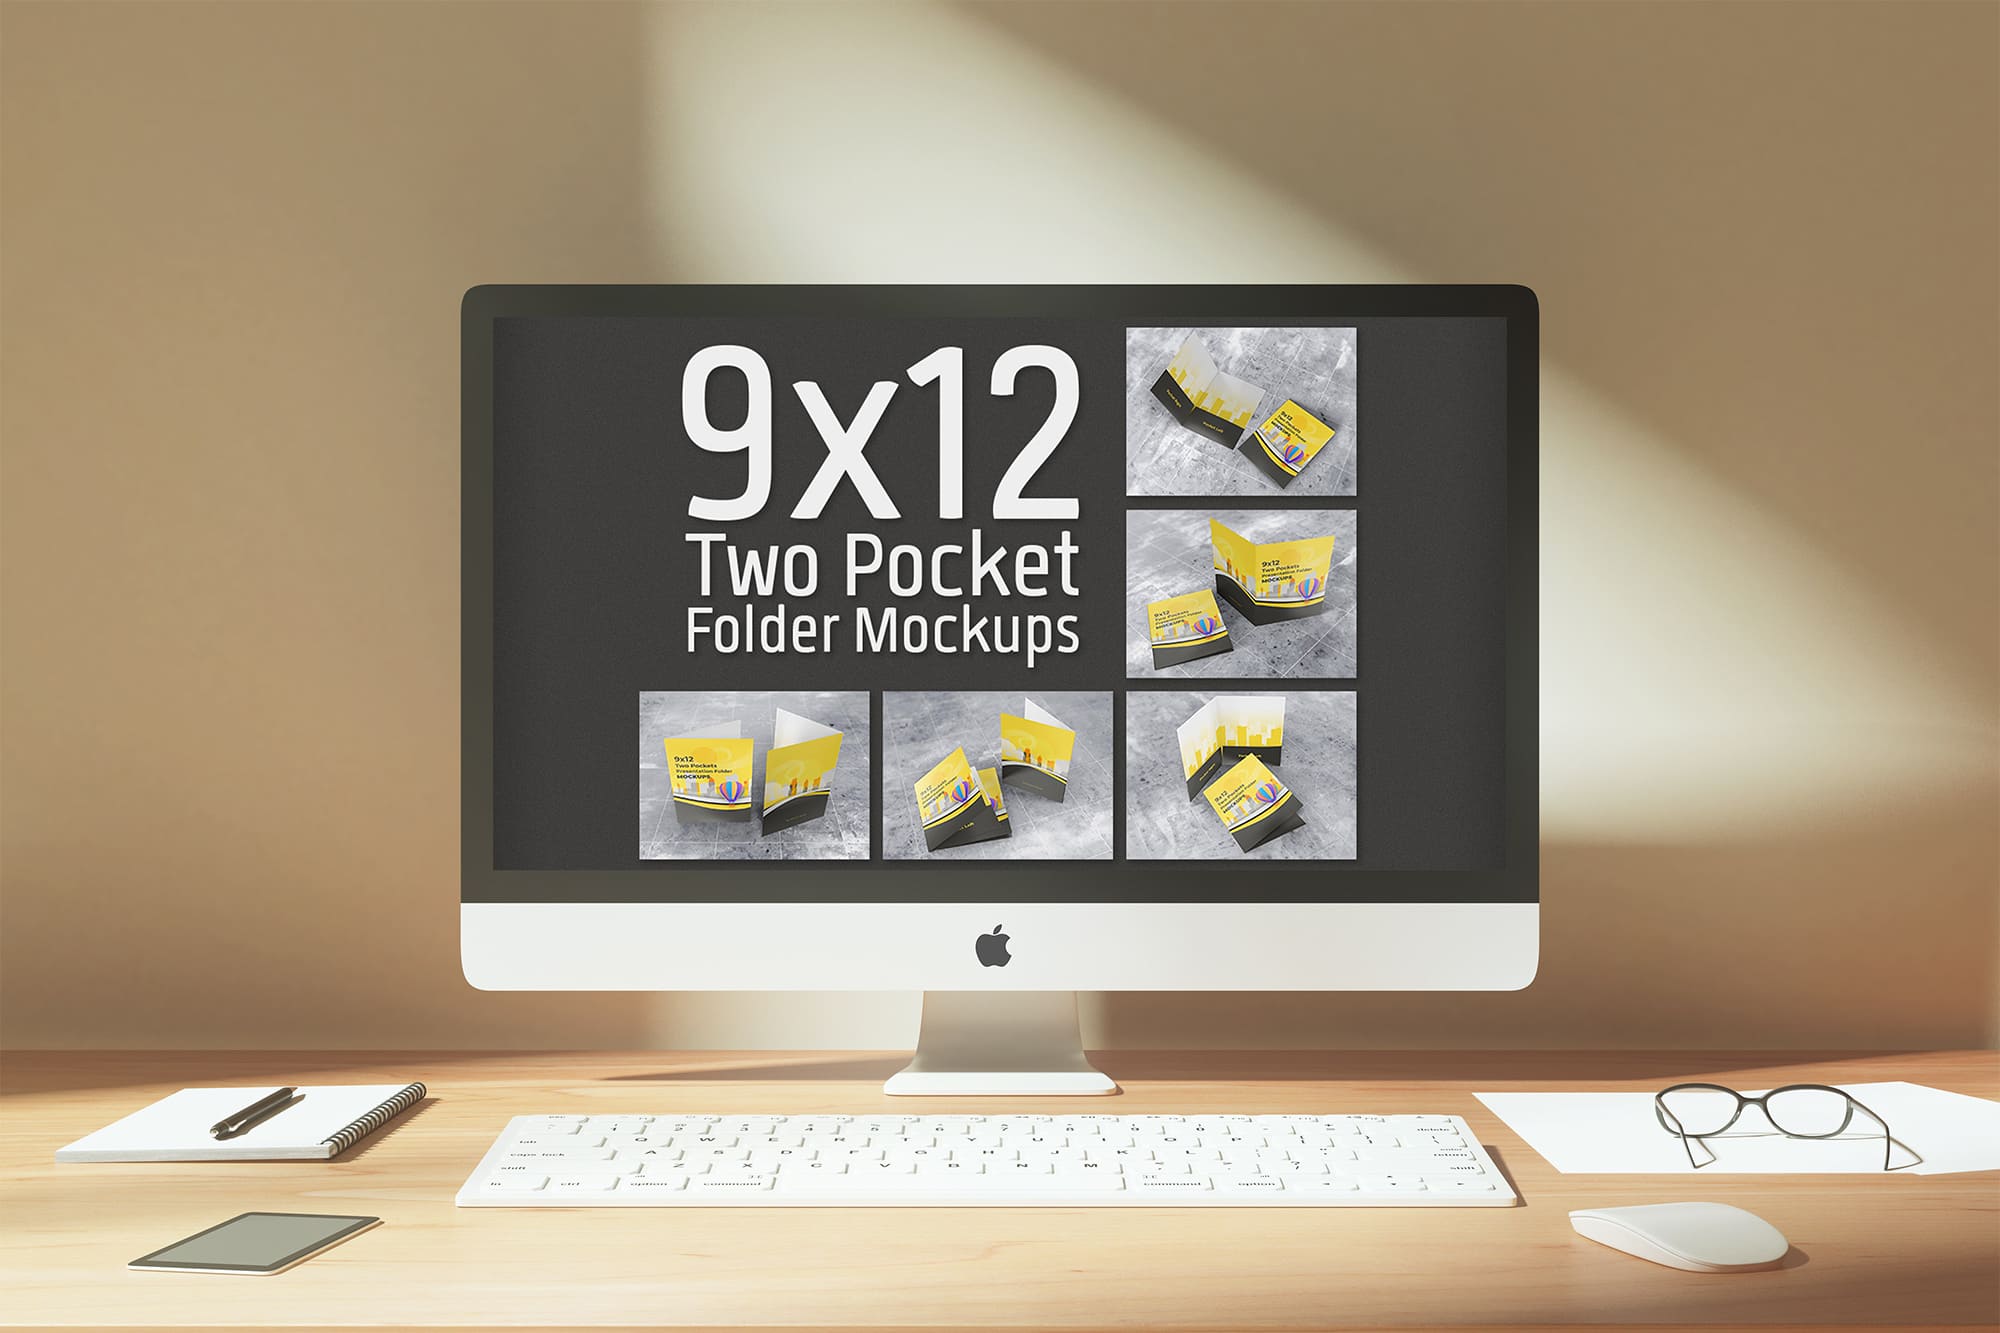 PC on screen showing cute 9x12 presentation folder mockup.